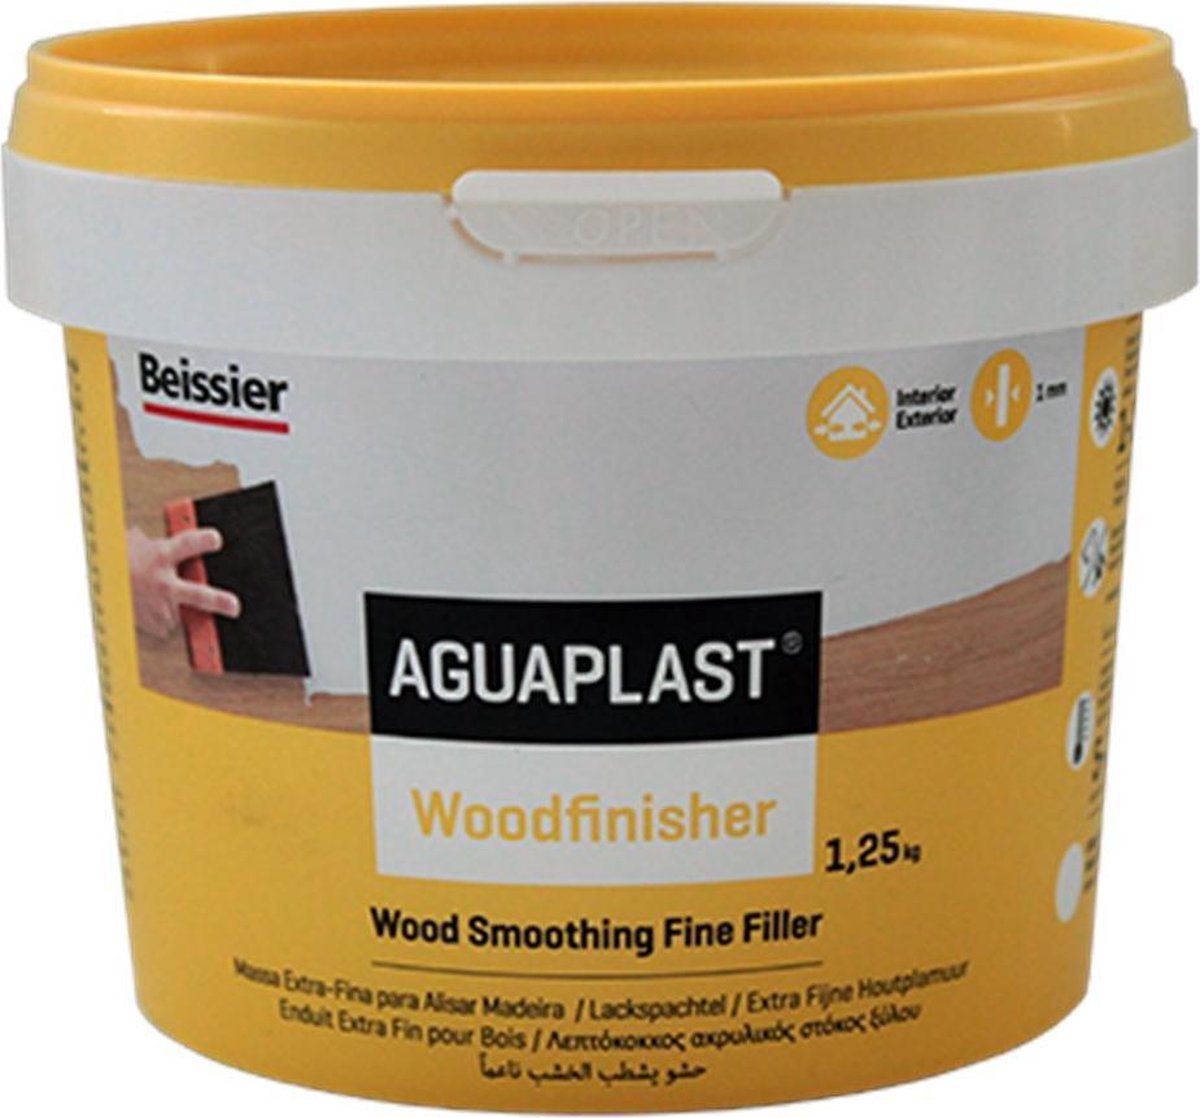 Aguaplast woodfinisher extra fijne houtplamuur - 1,25 kg